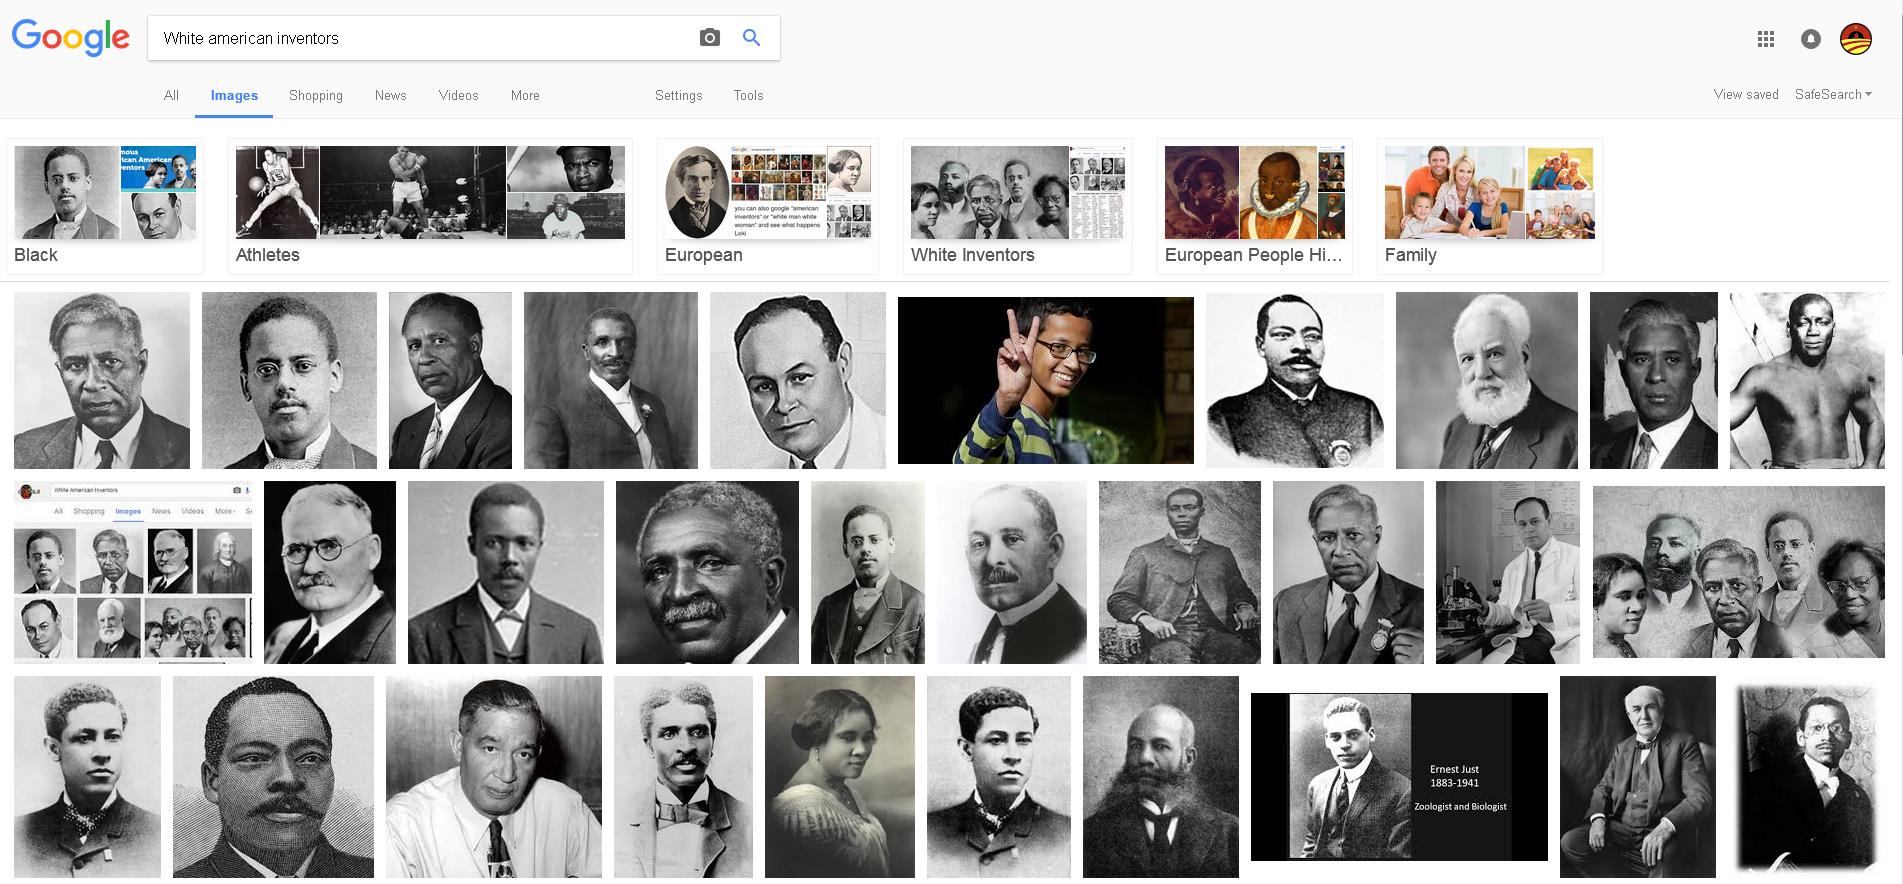 google-white-american-inventors.jpg